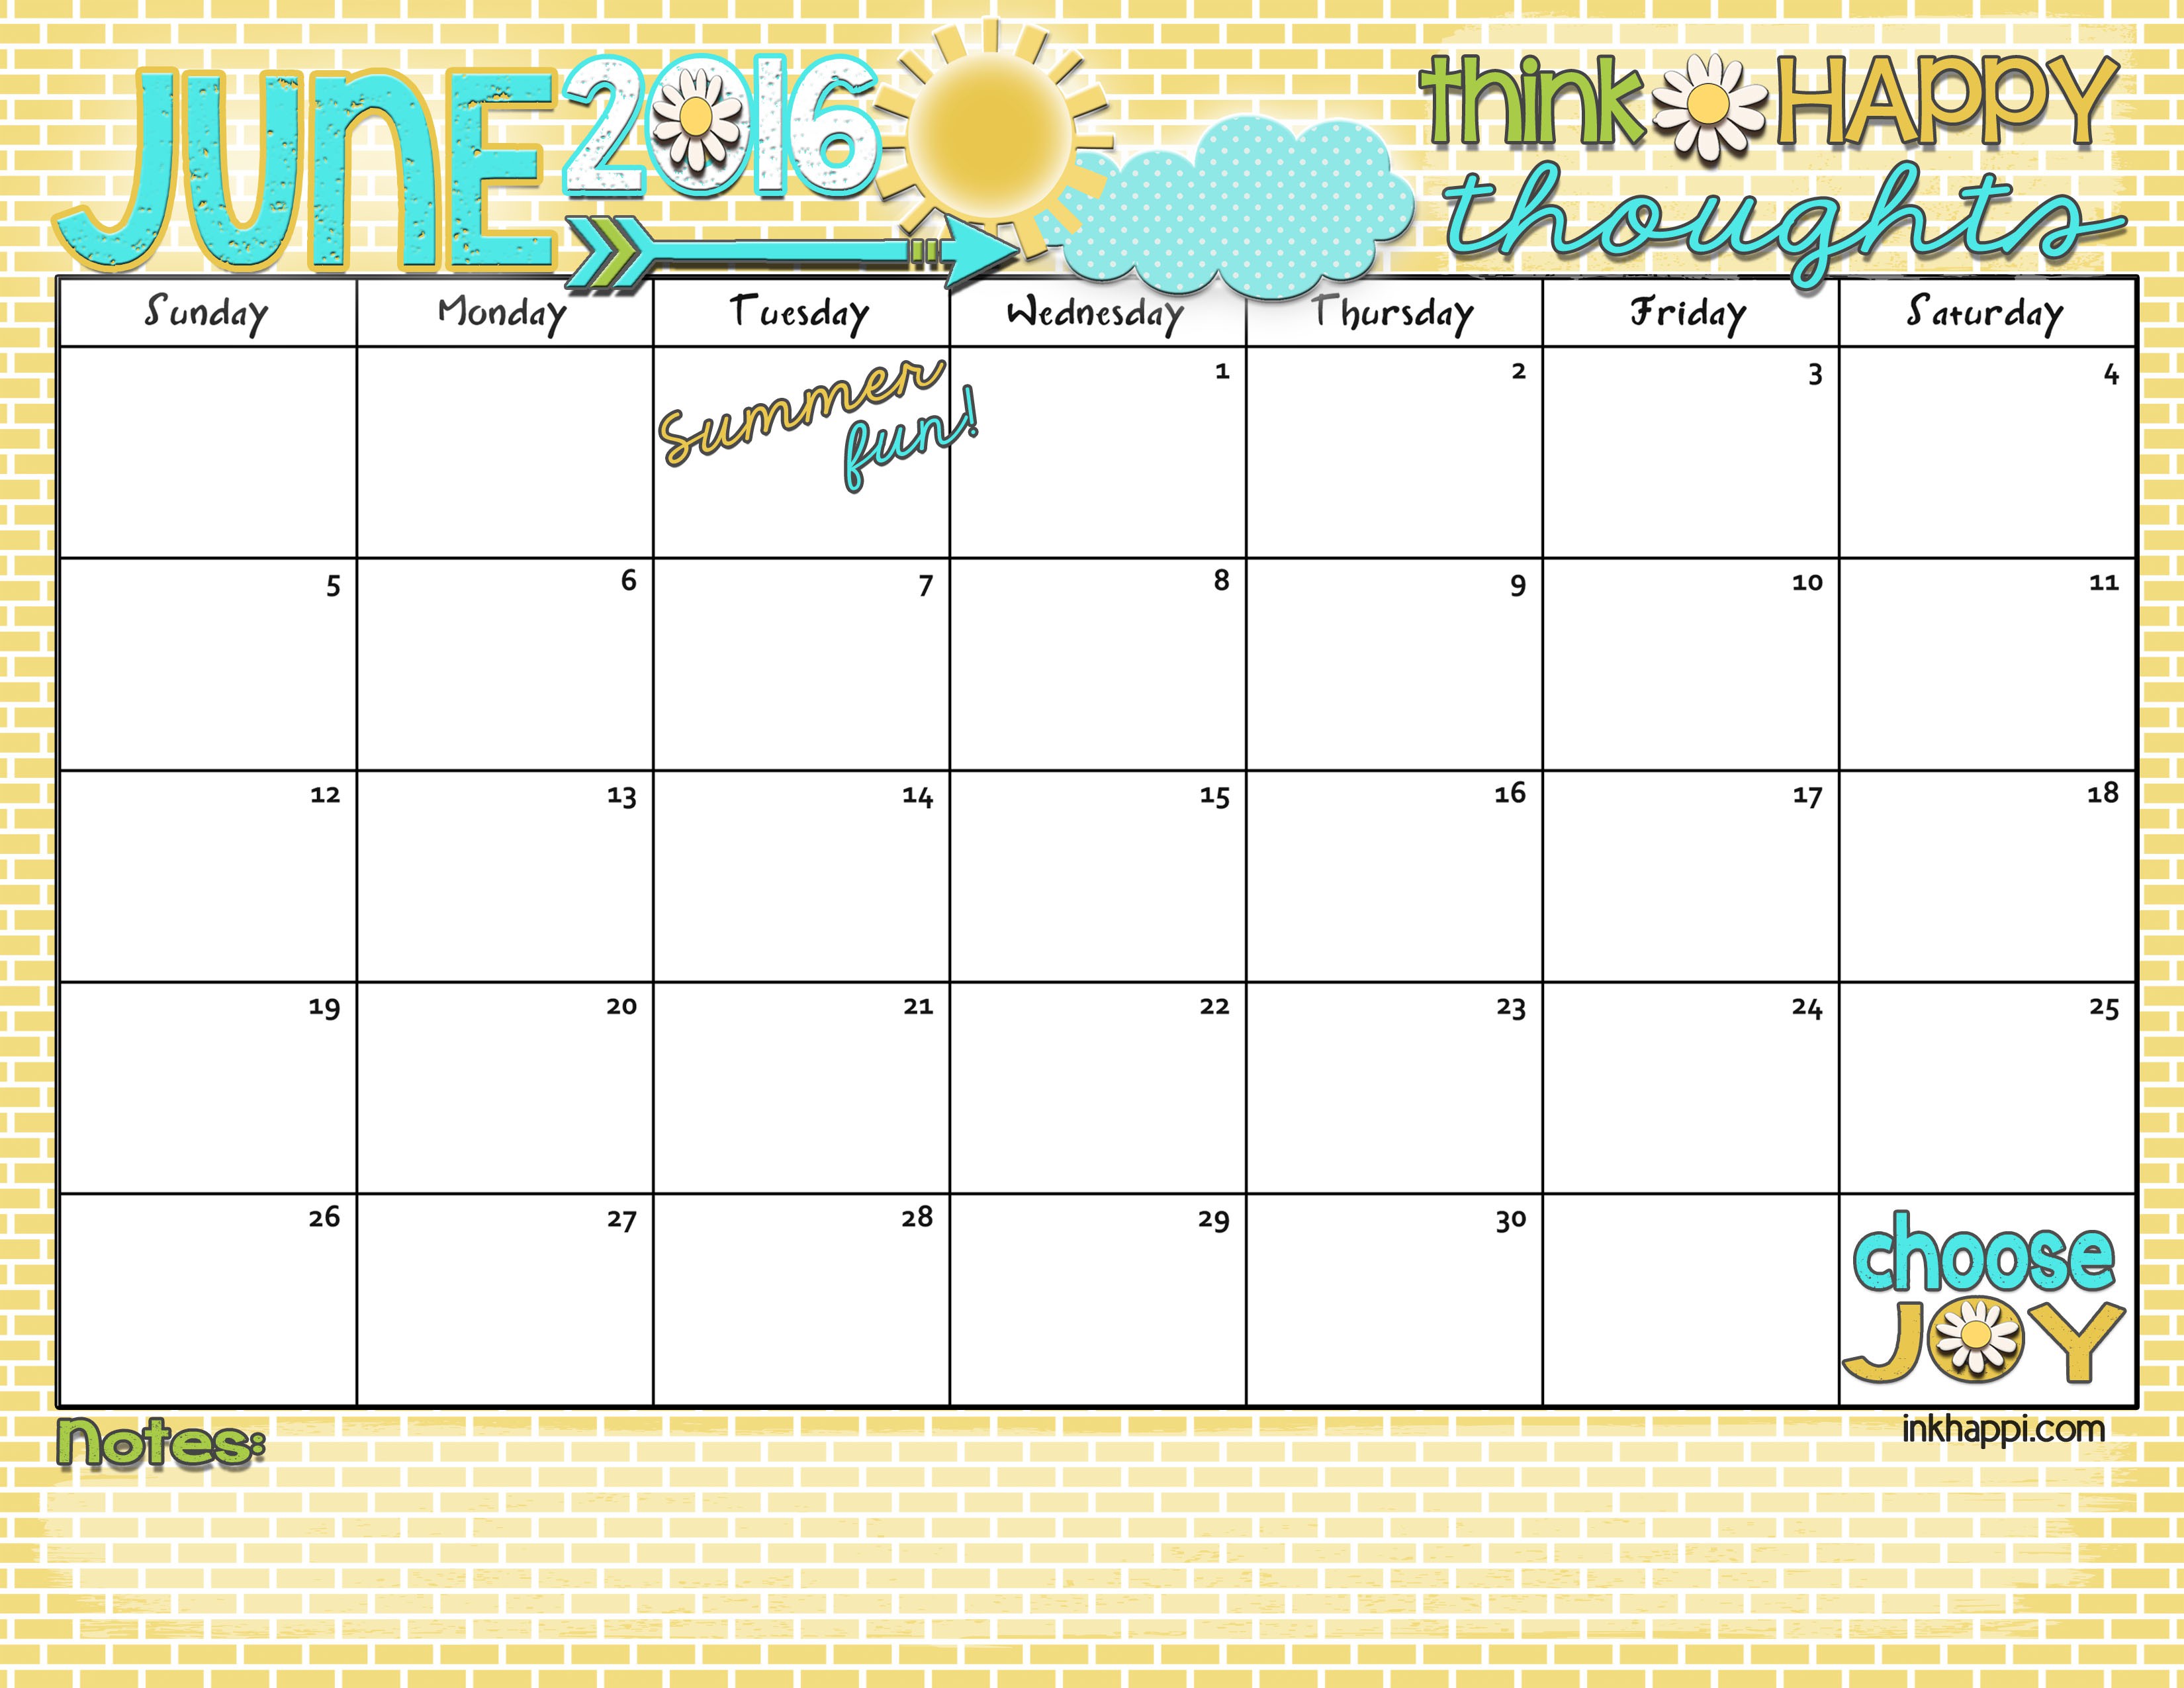 june 2016 calendar lets have some summer fun inkhappi